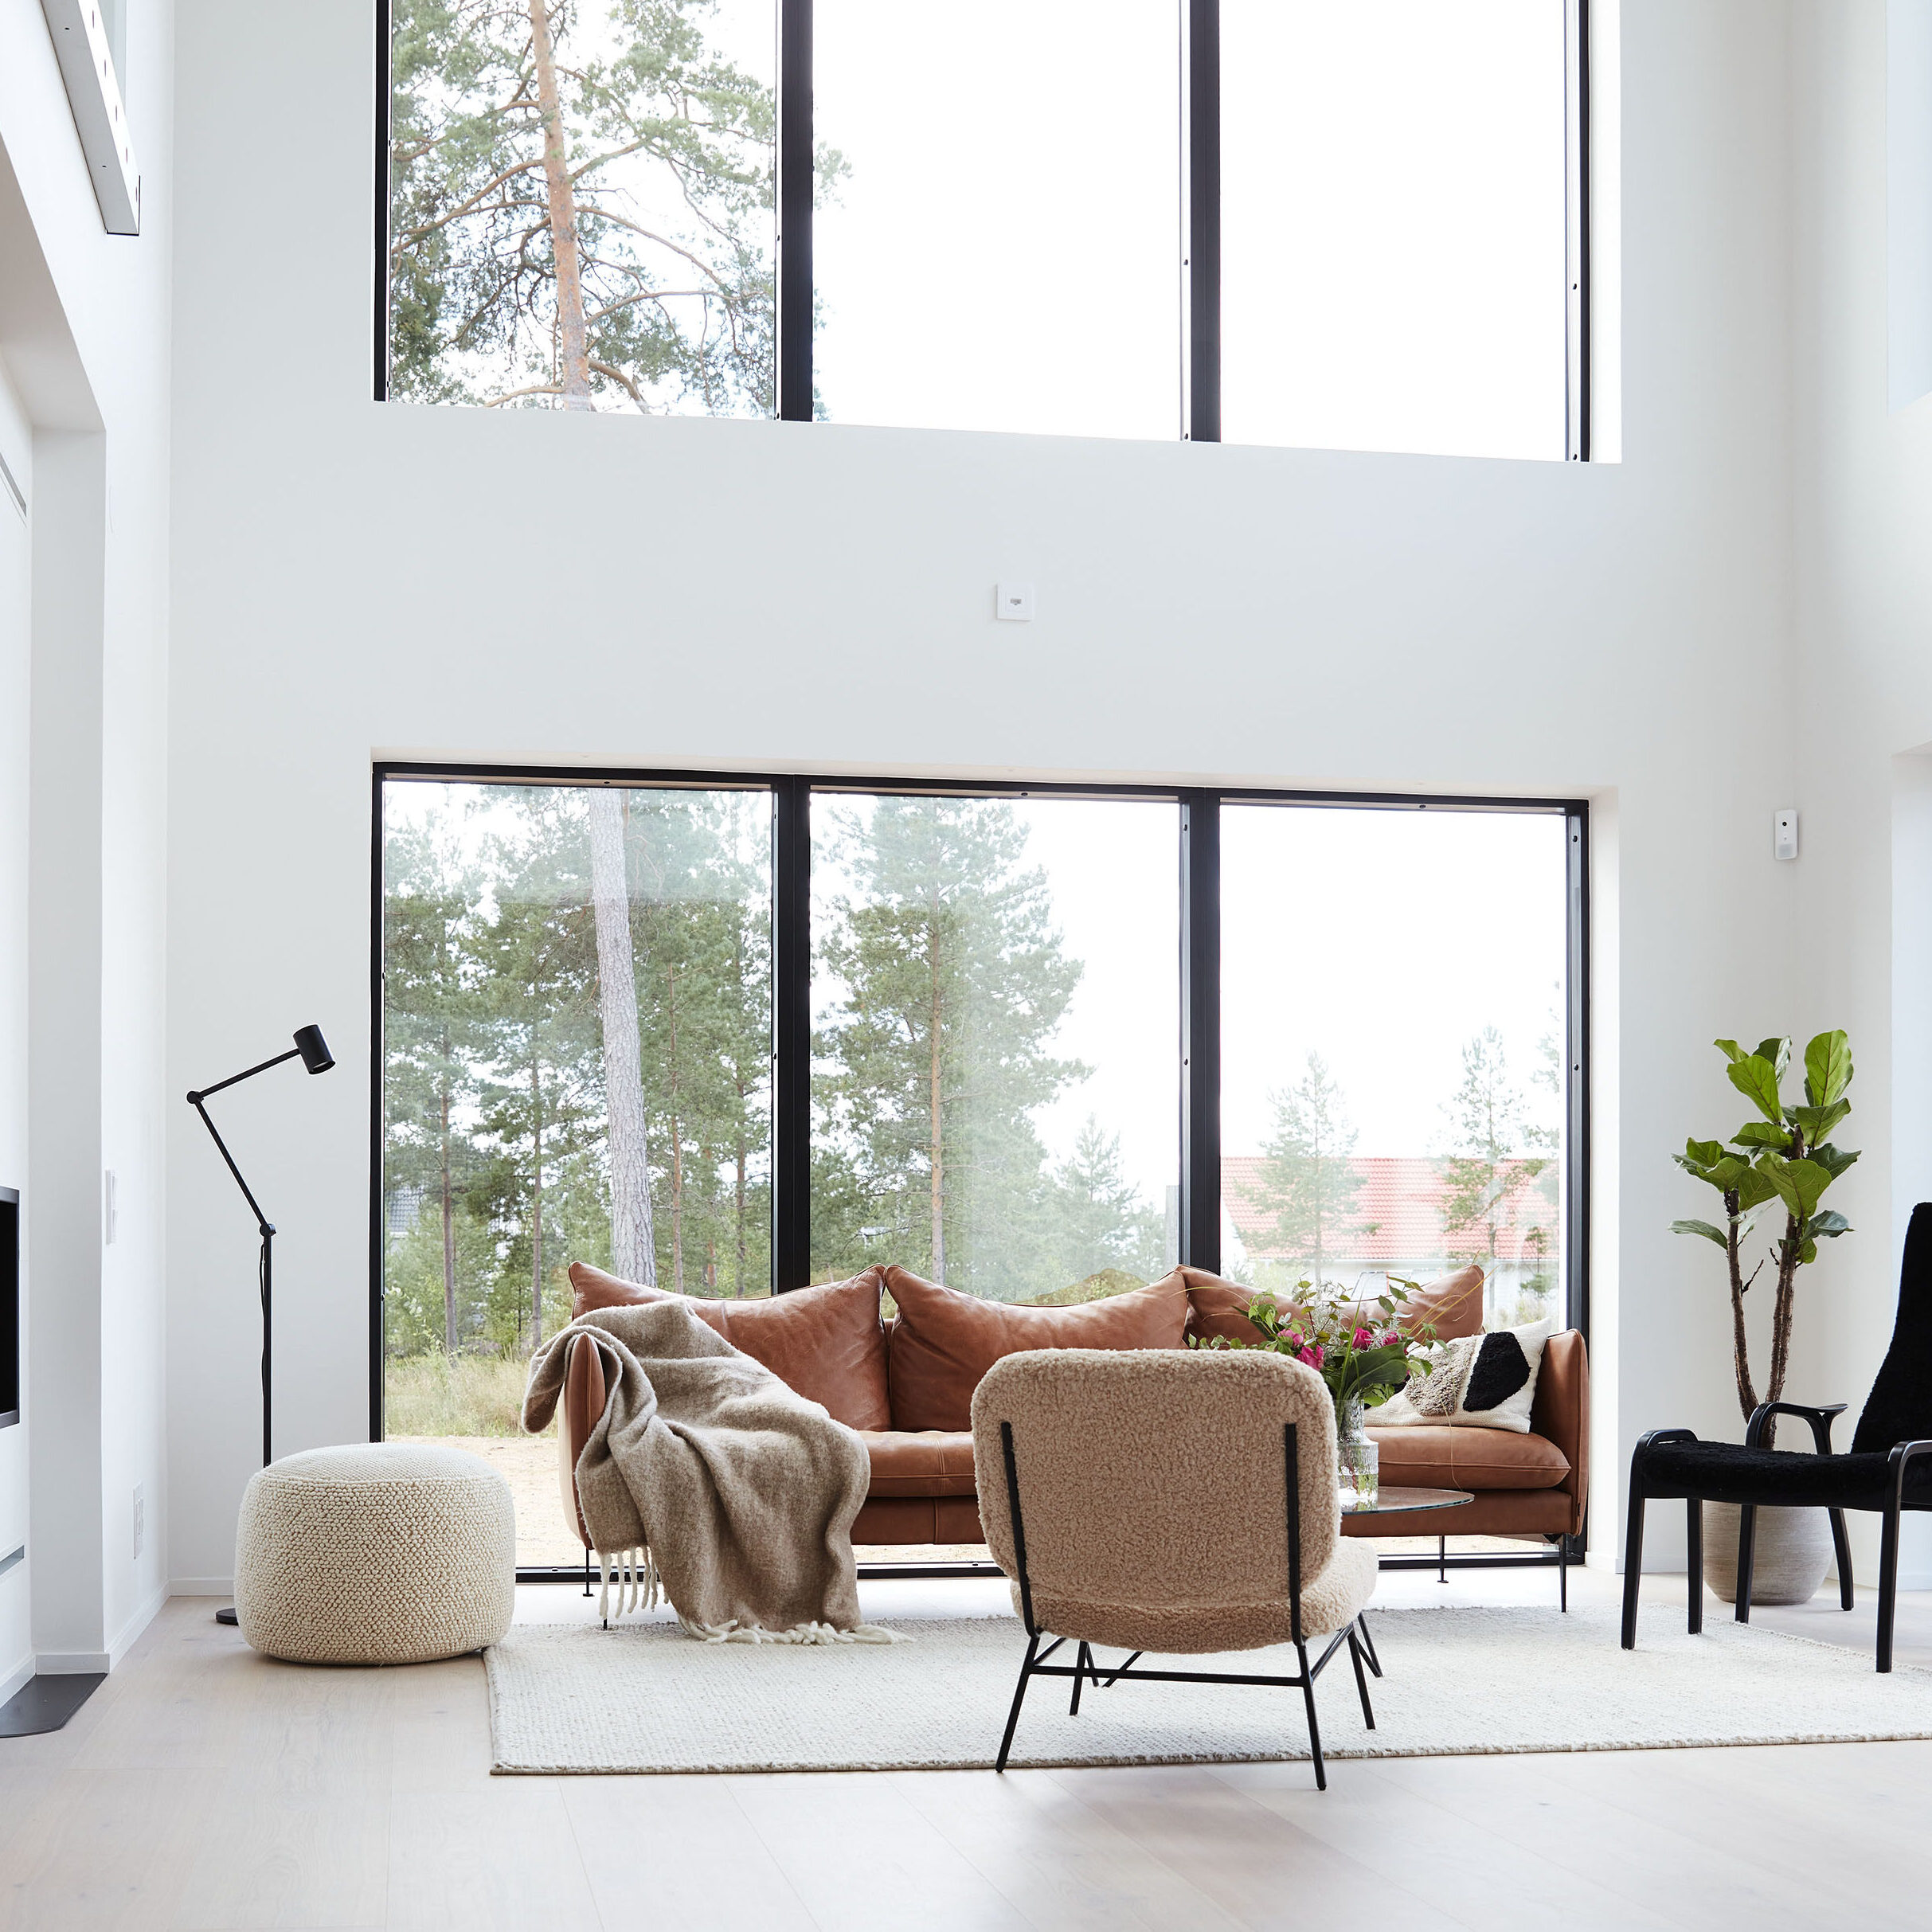 Swedish home composite windows